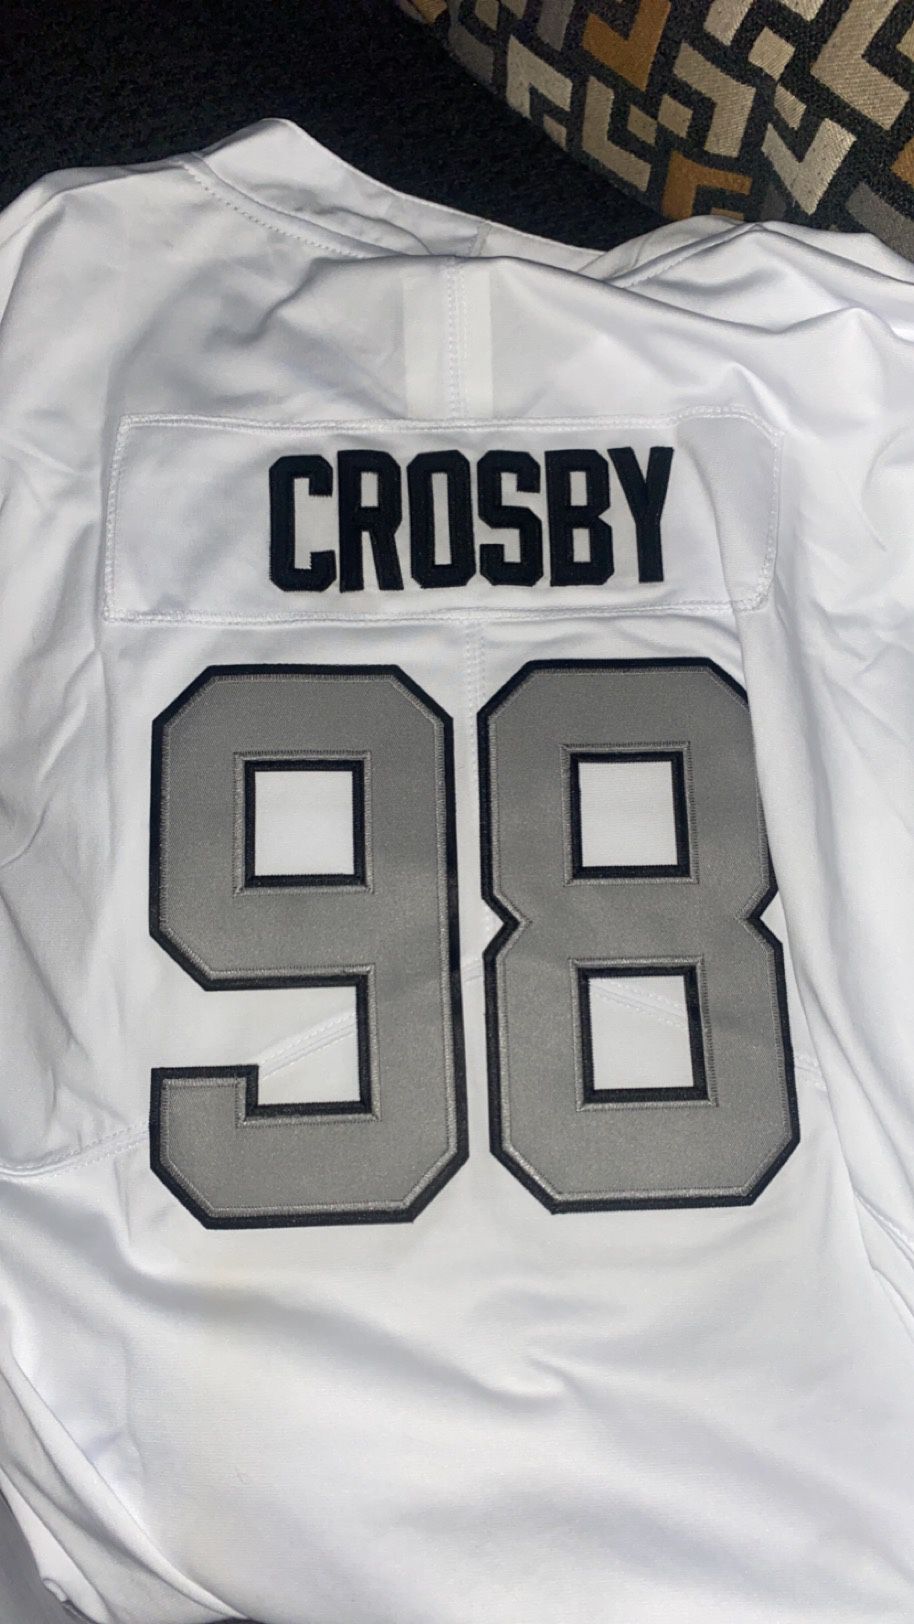 Raiders Jersey Maxx Crosby Jersey 